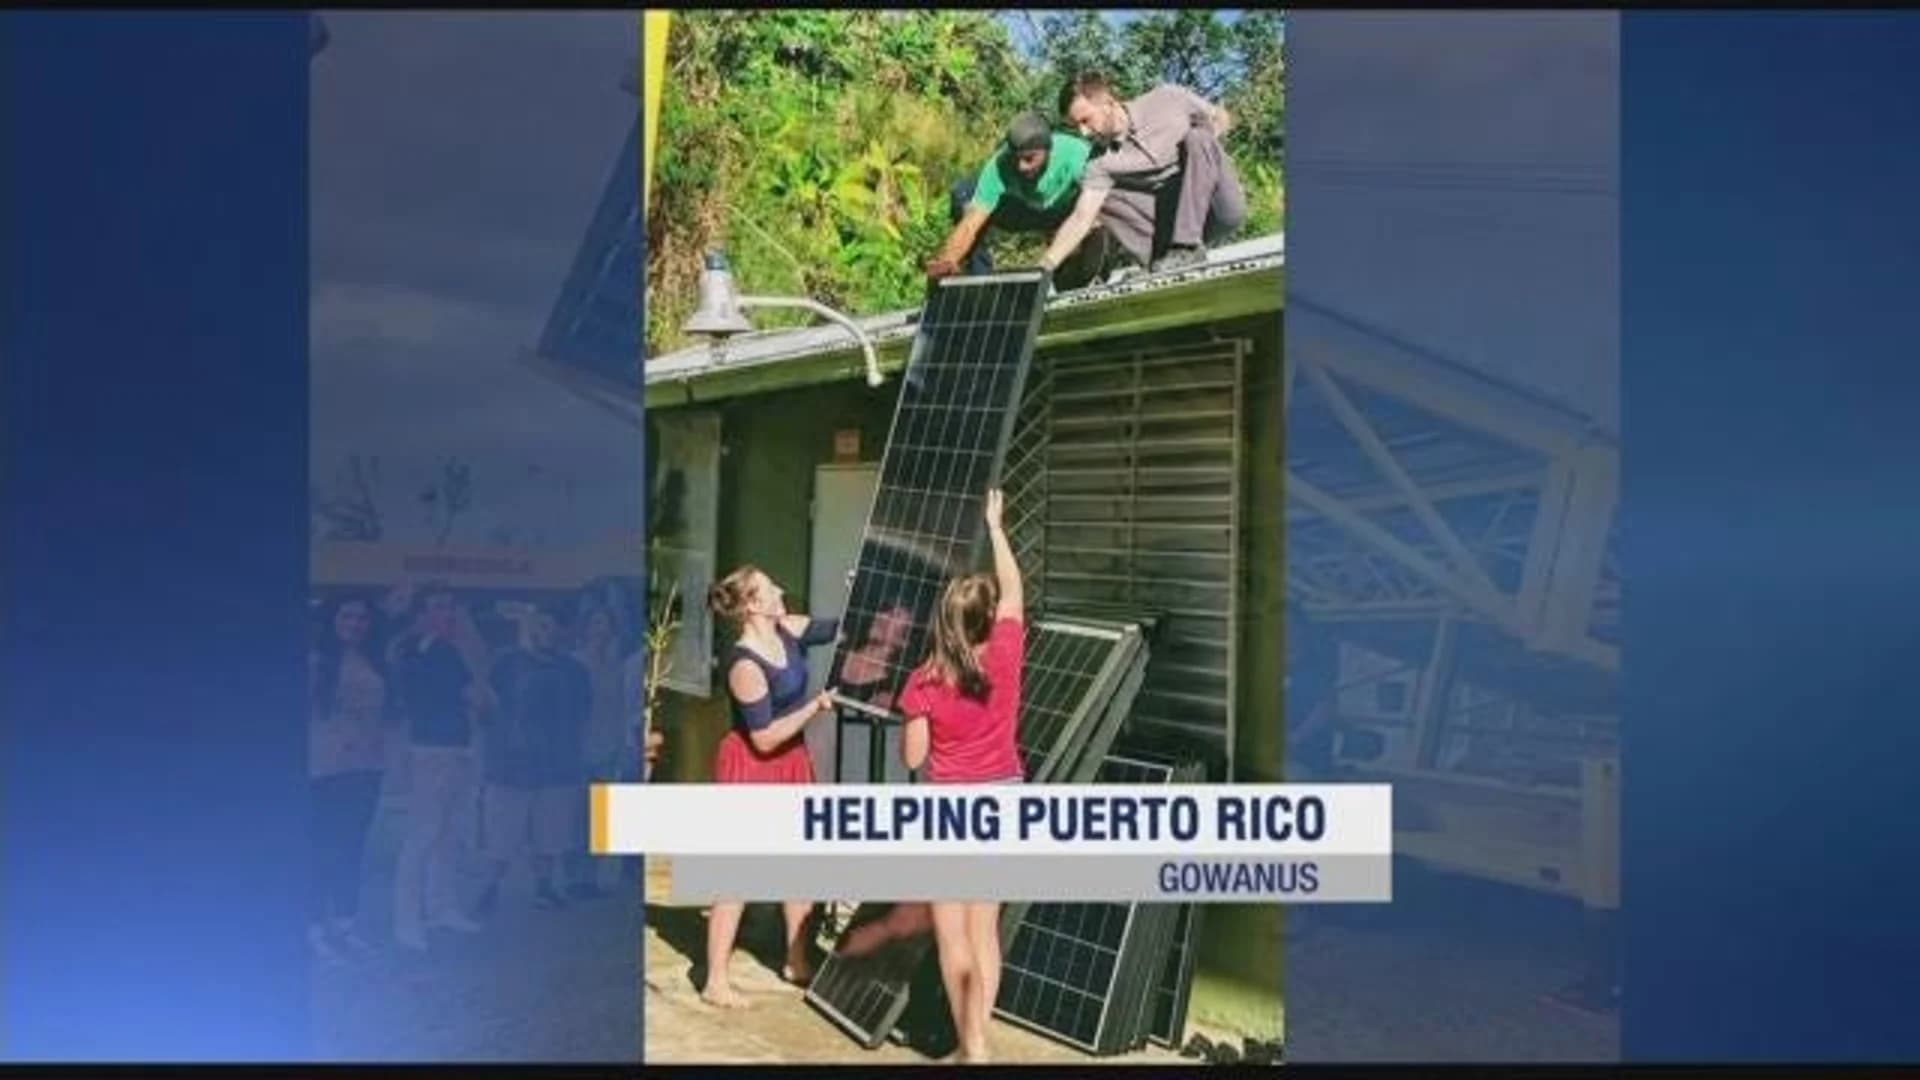 Nonprofit aids Puerto Rico recovery through green energy